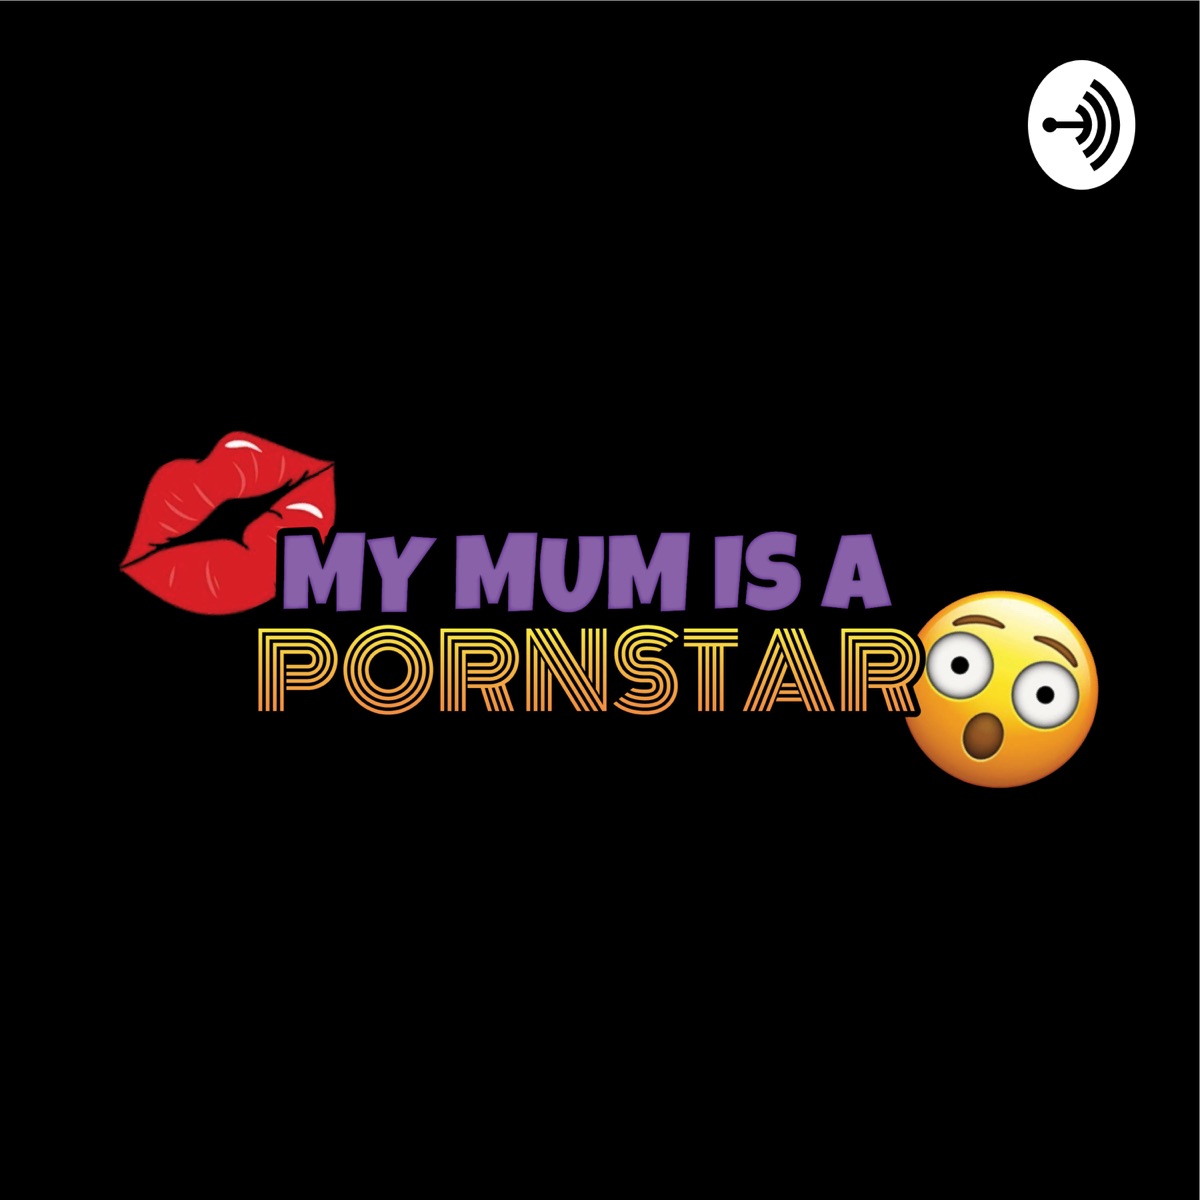 My Mom Is A Pornstar